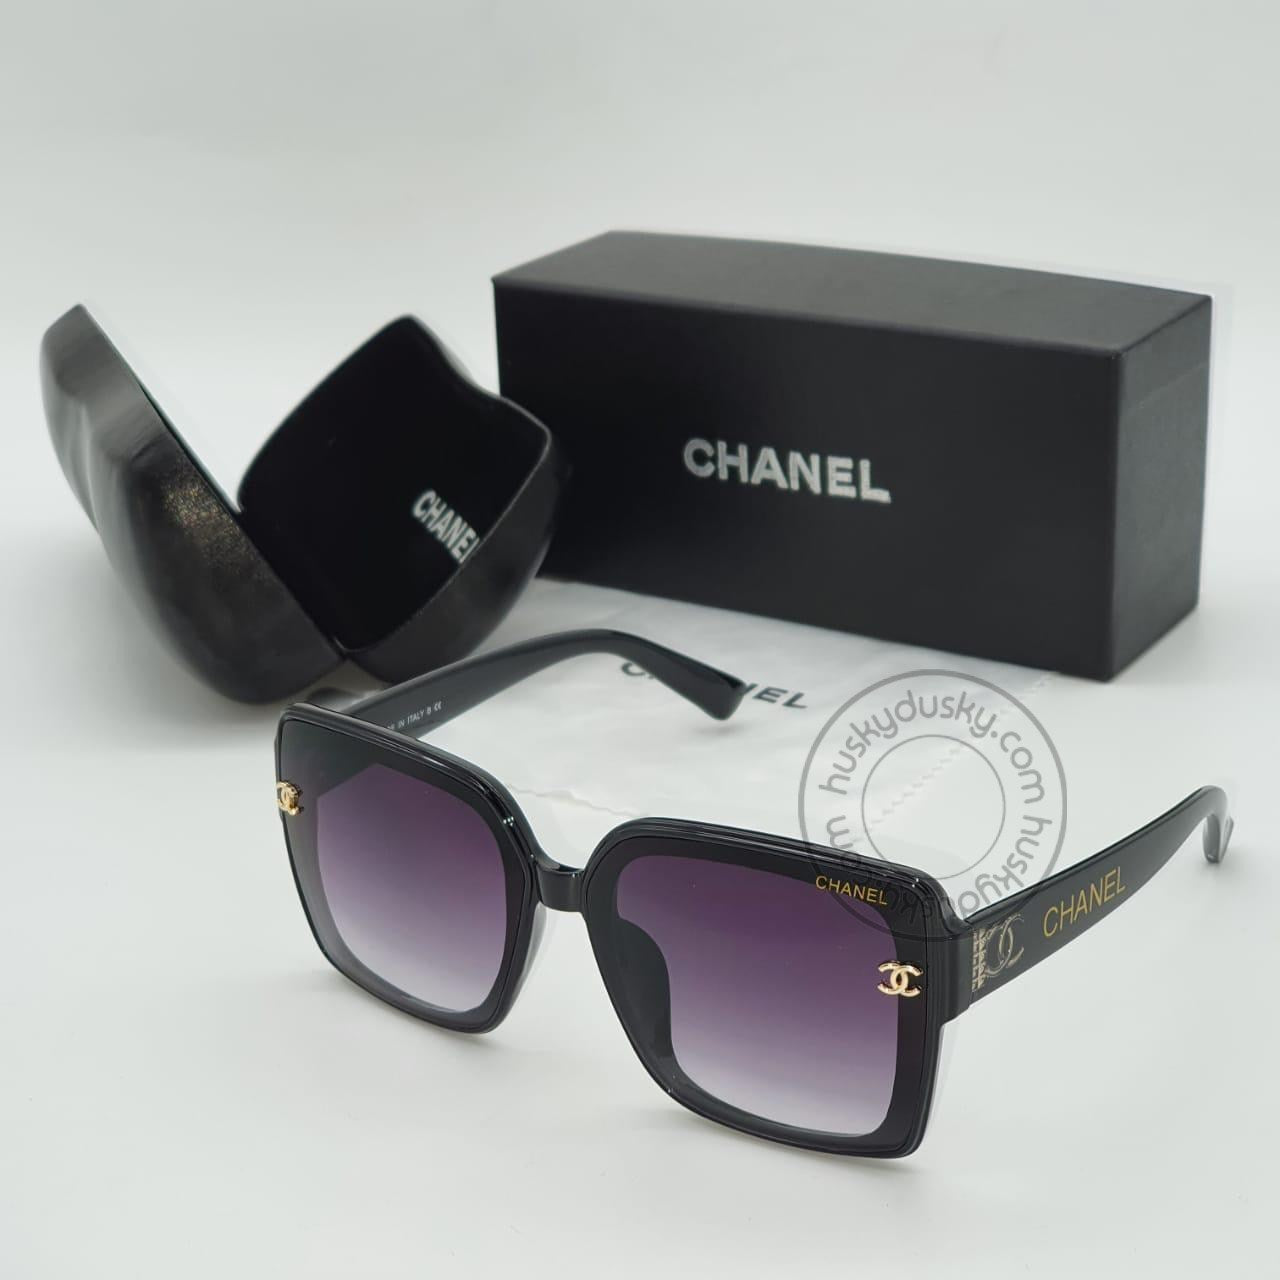 Chanel Purple Shade Glass Women's Sunglass for Woman or Girl CHA-20 Black Frame Gift Sunglass